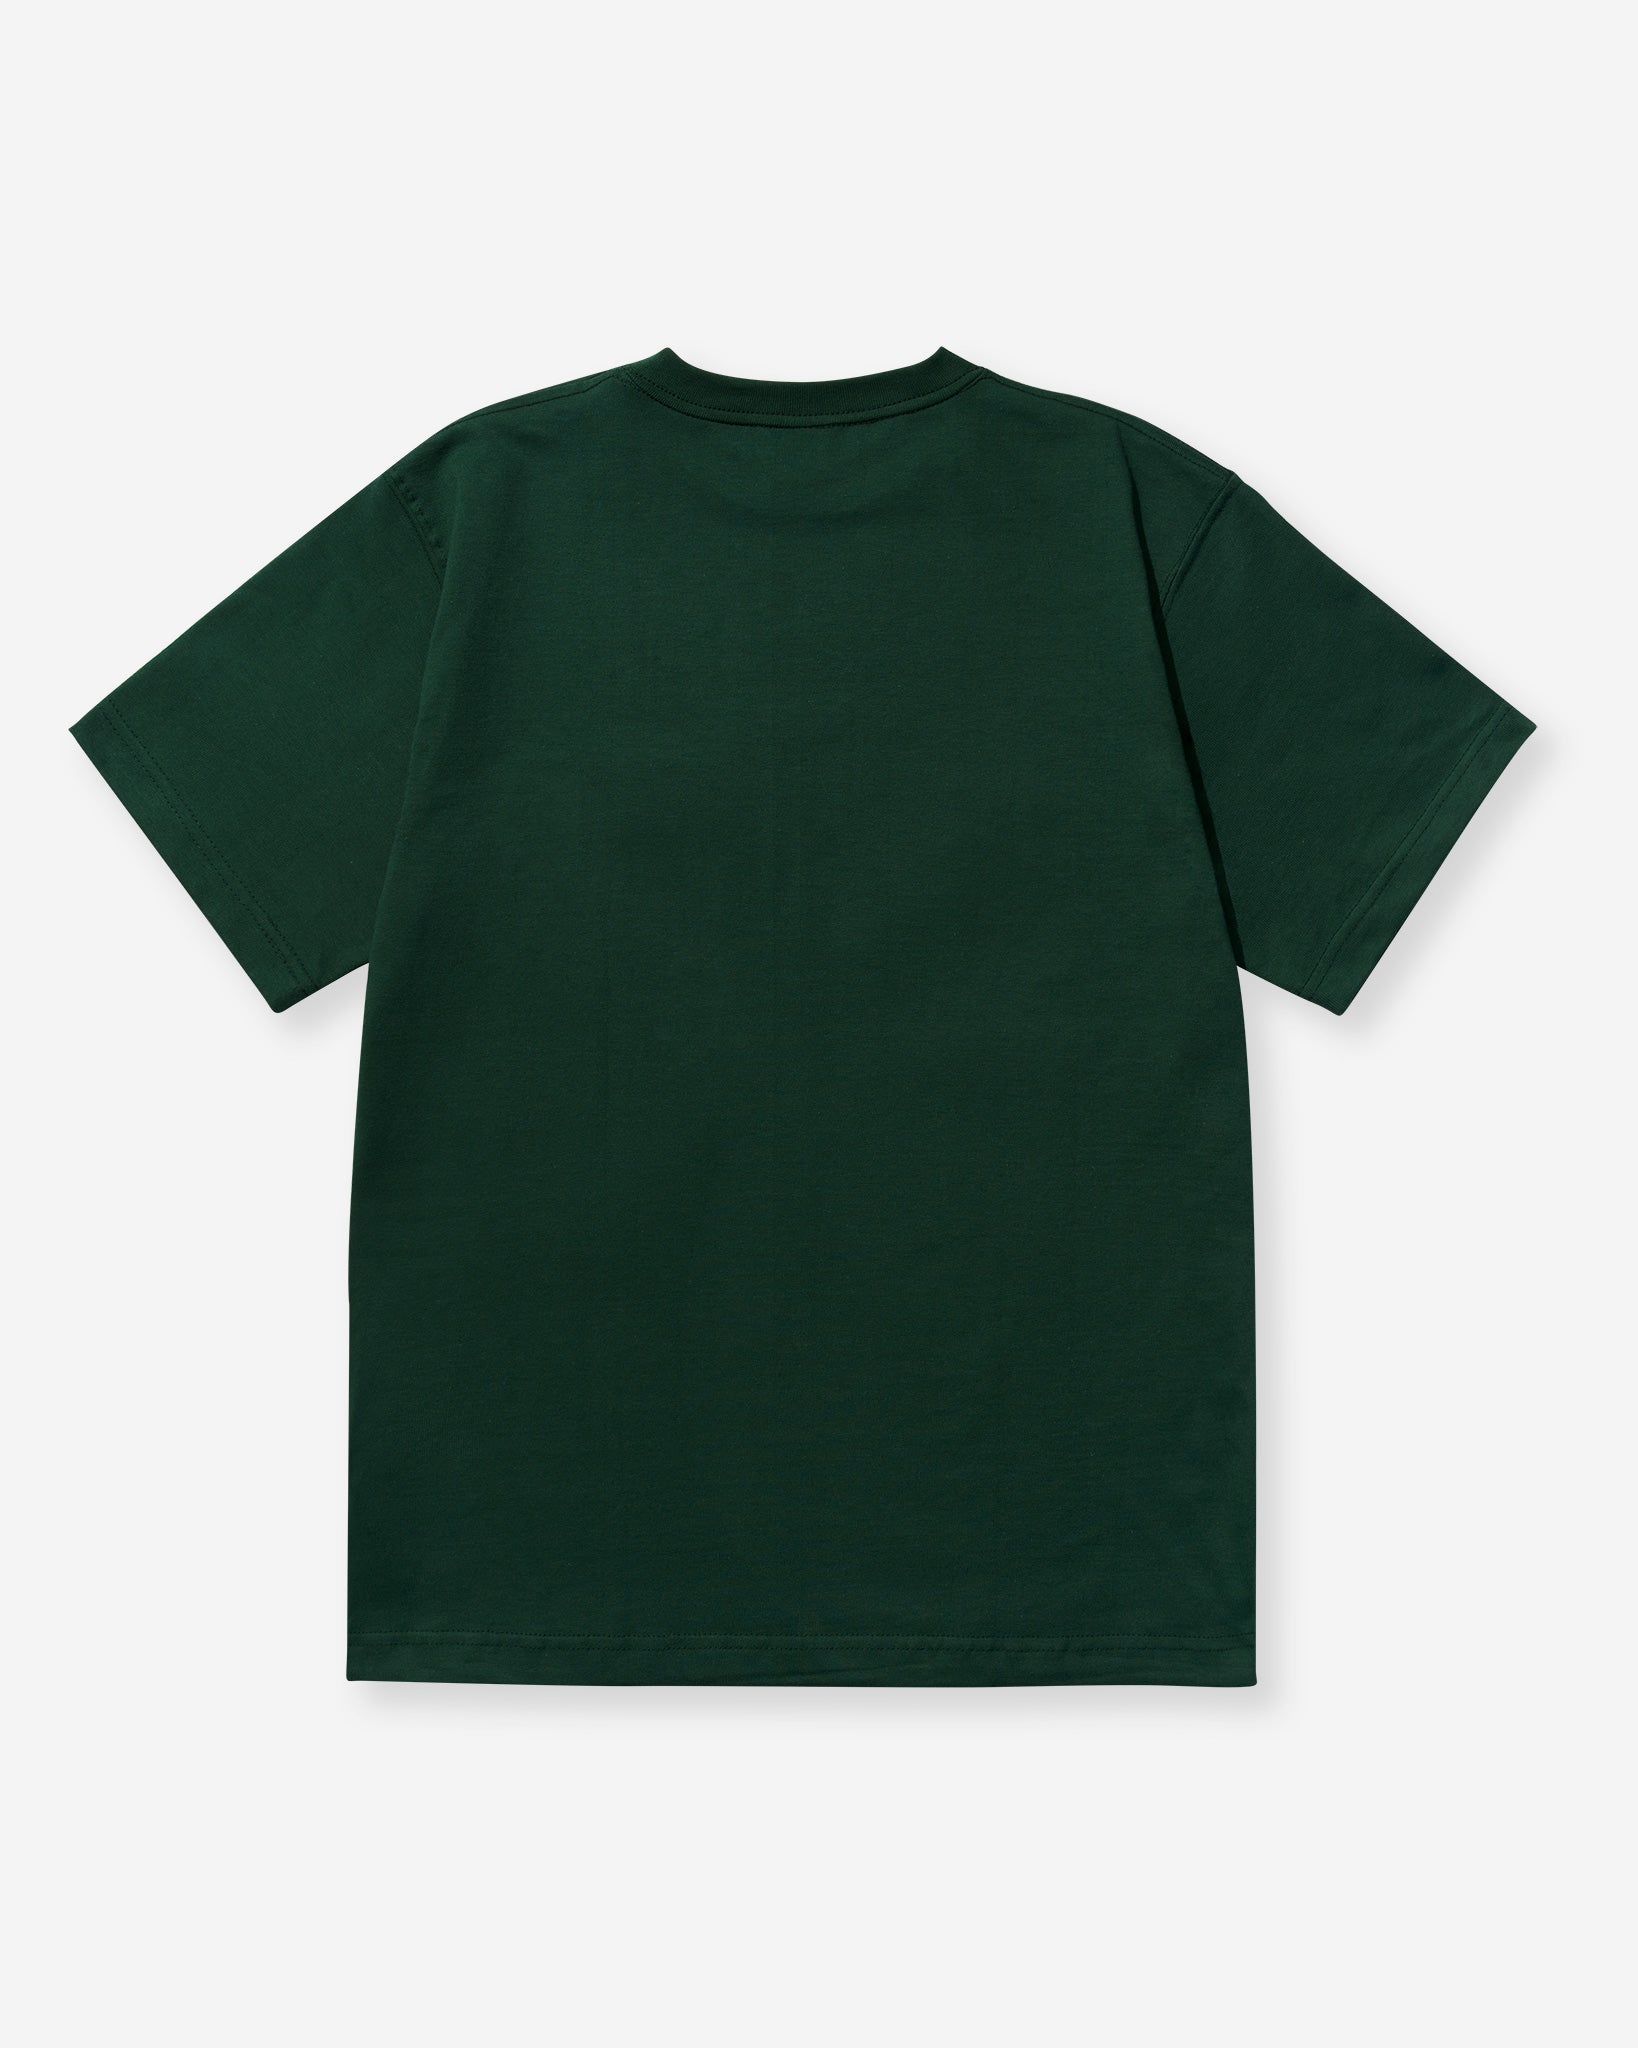 MAX-WEIGHT® Pocket T-Shirt Dark - – Rhythmic Tones Green